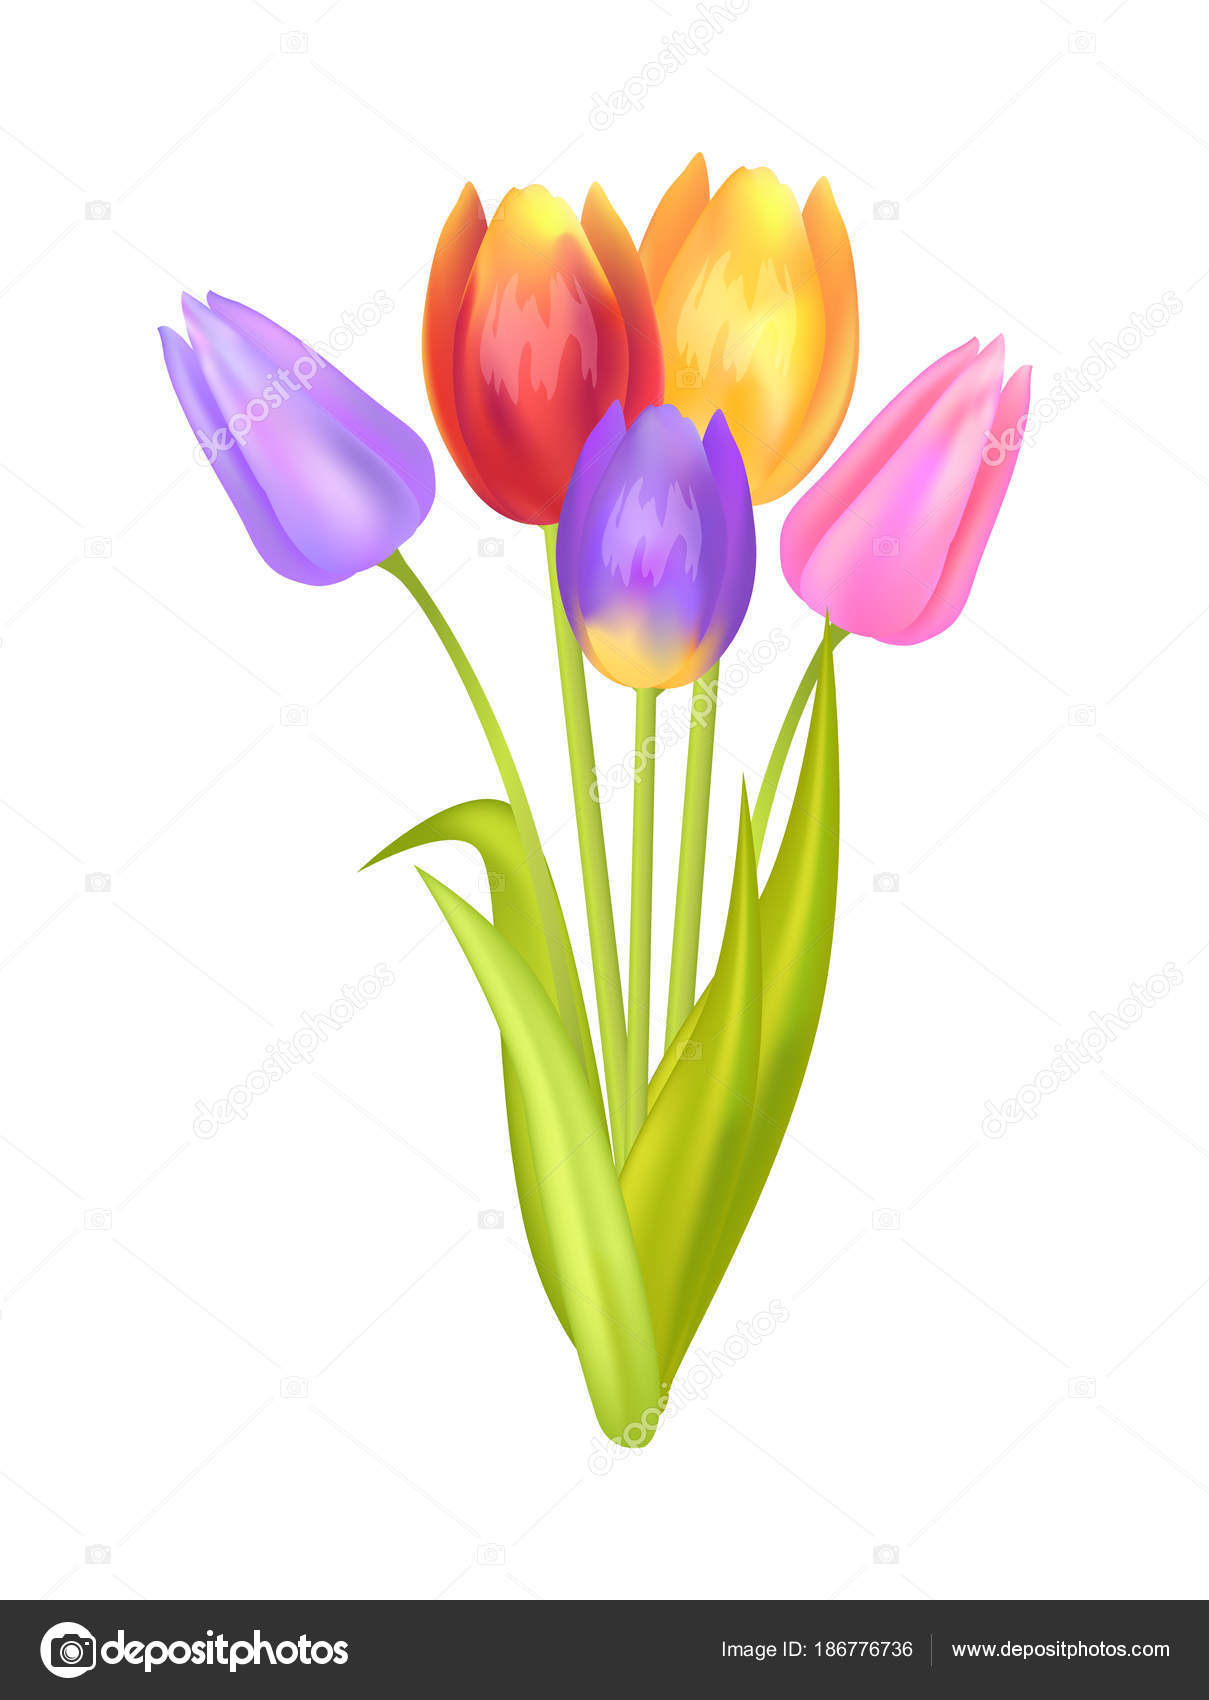 Three colorful tulips photo